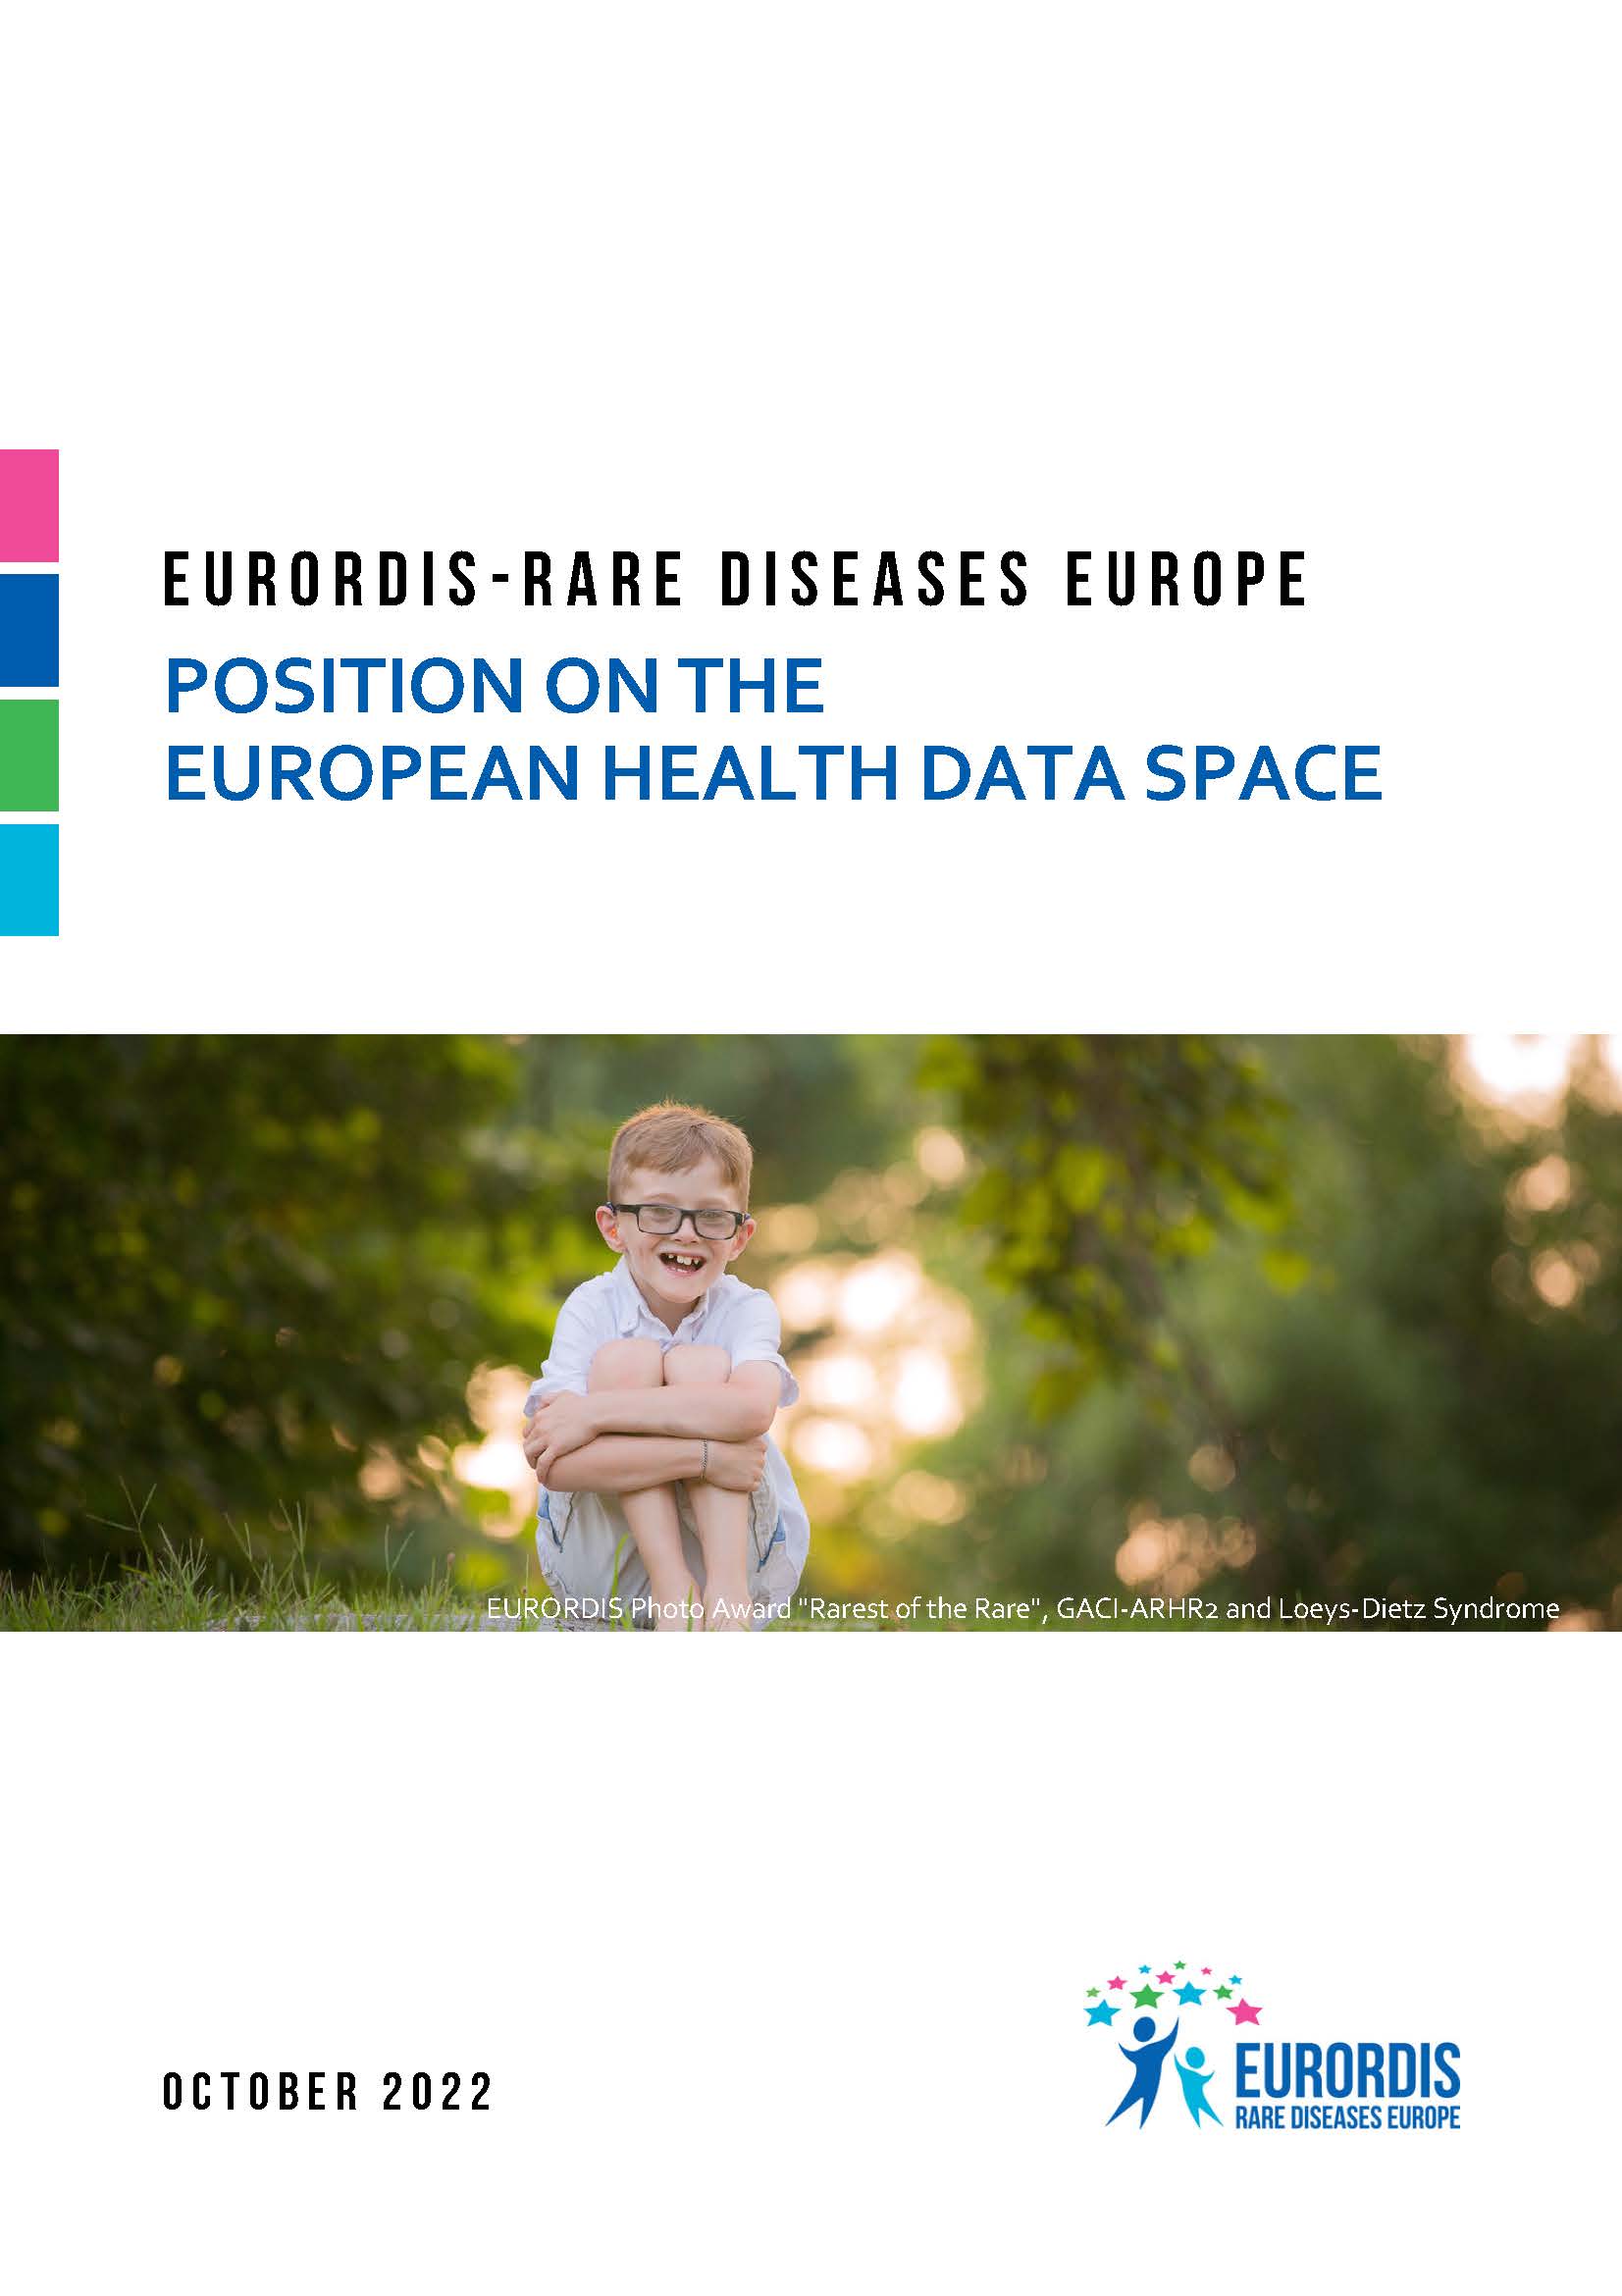 EURORDIS‘ Position on the European Health Data Space